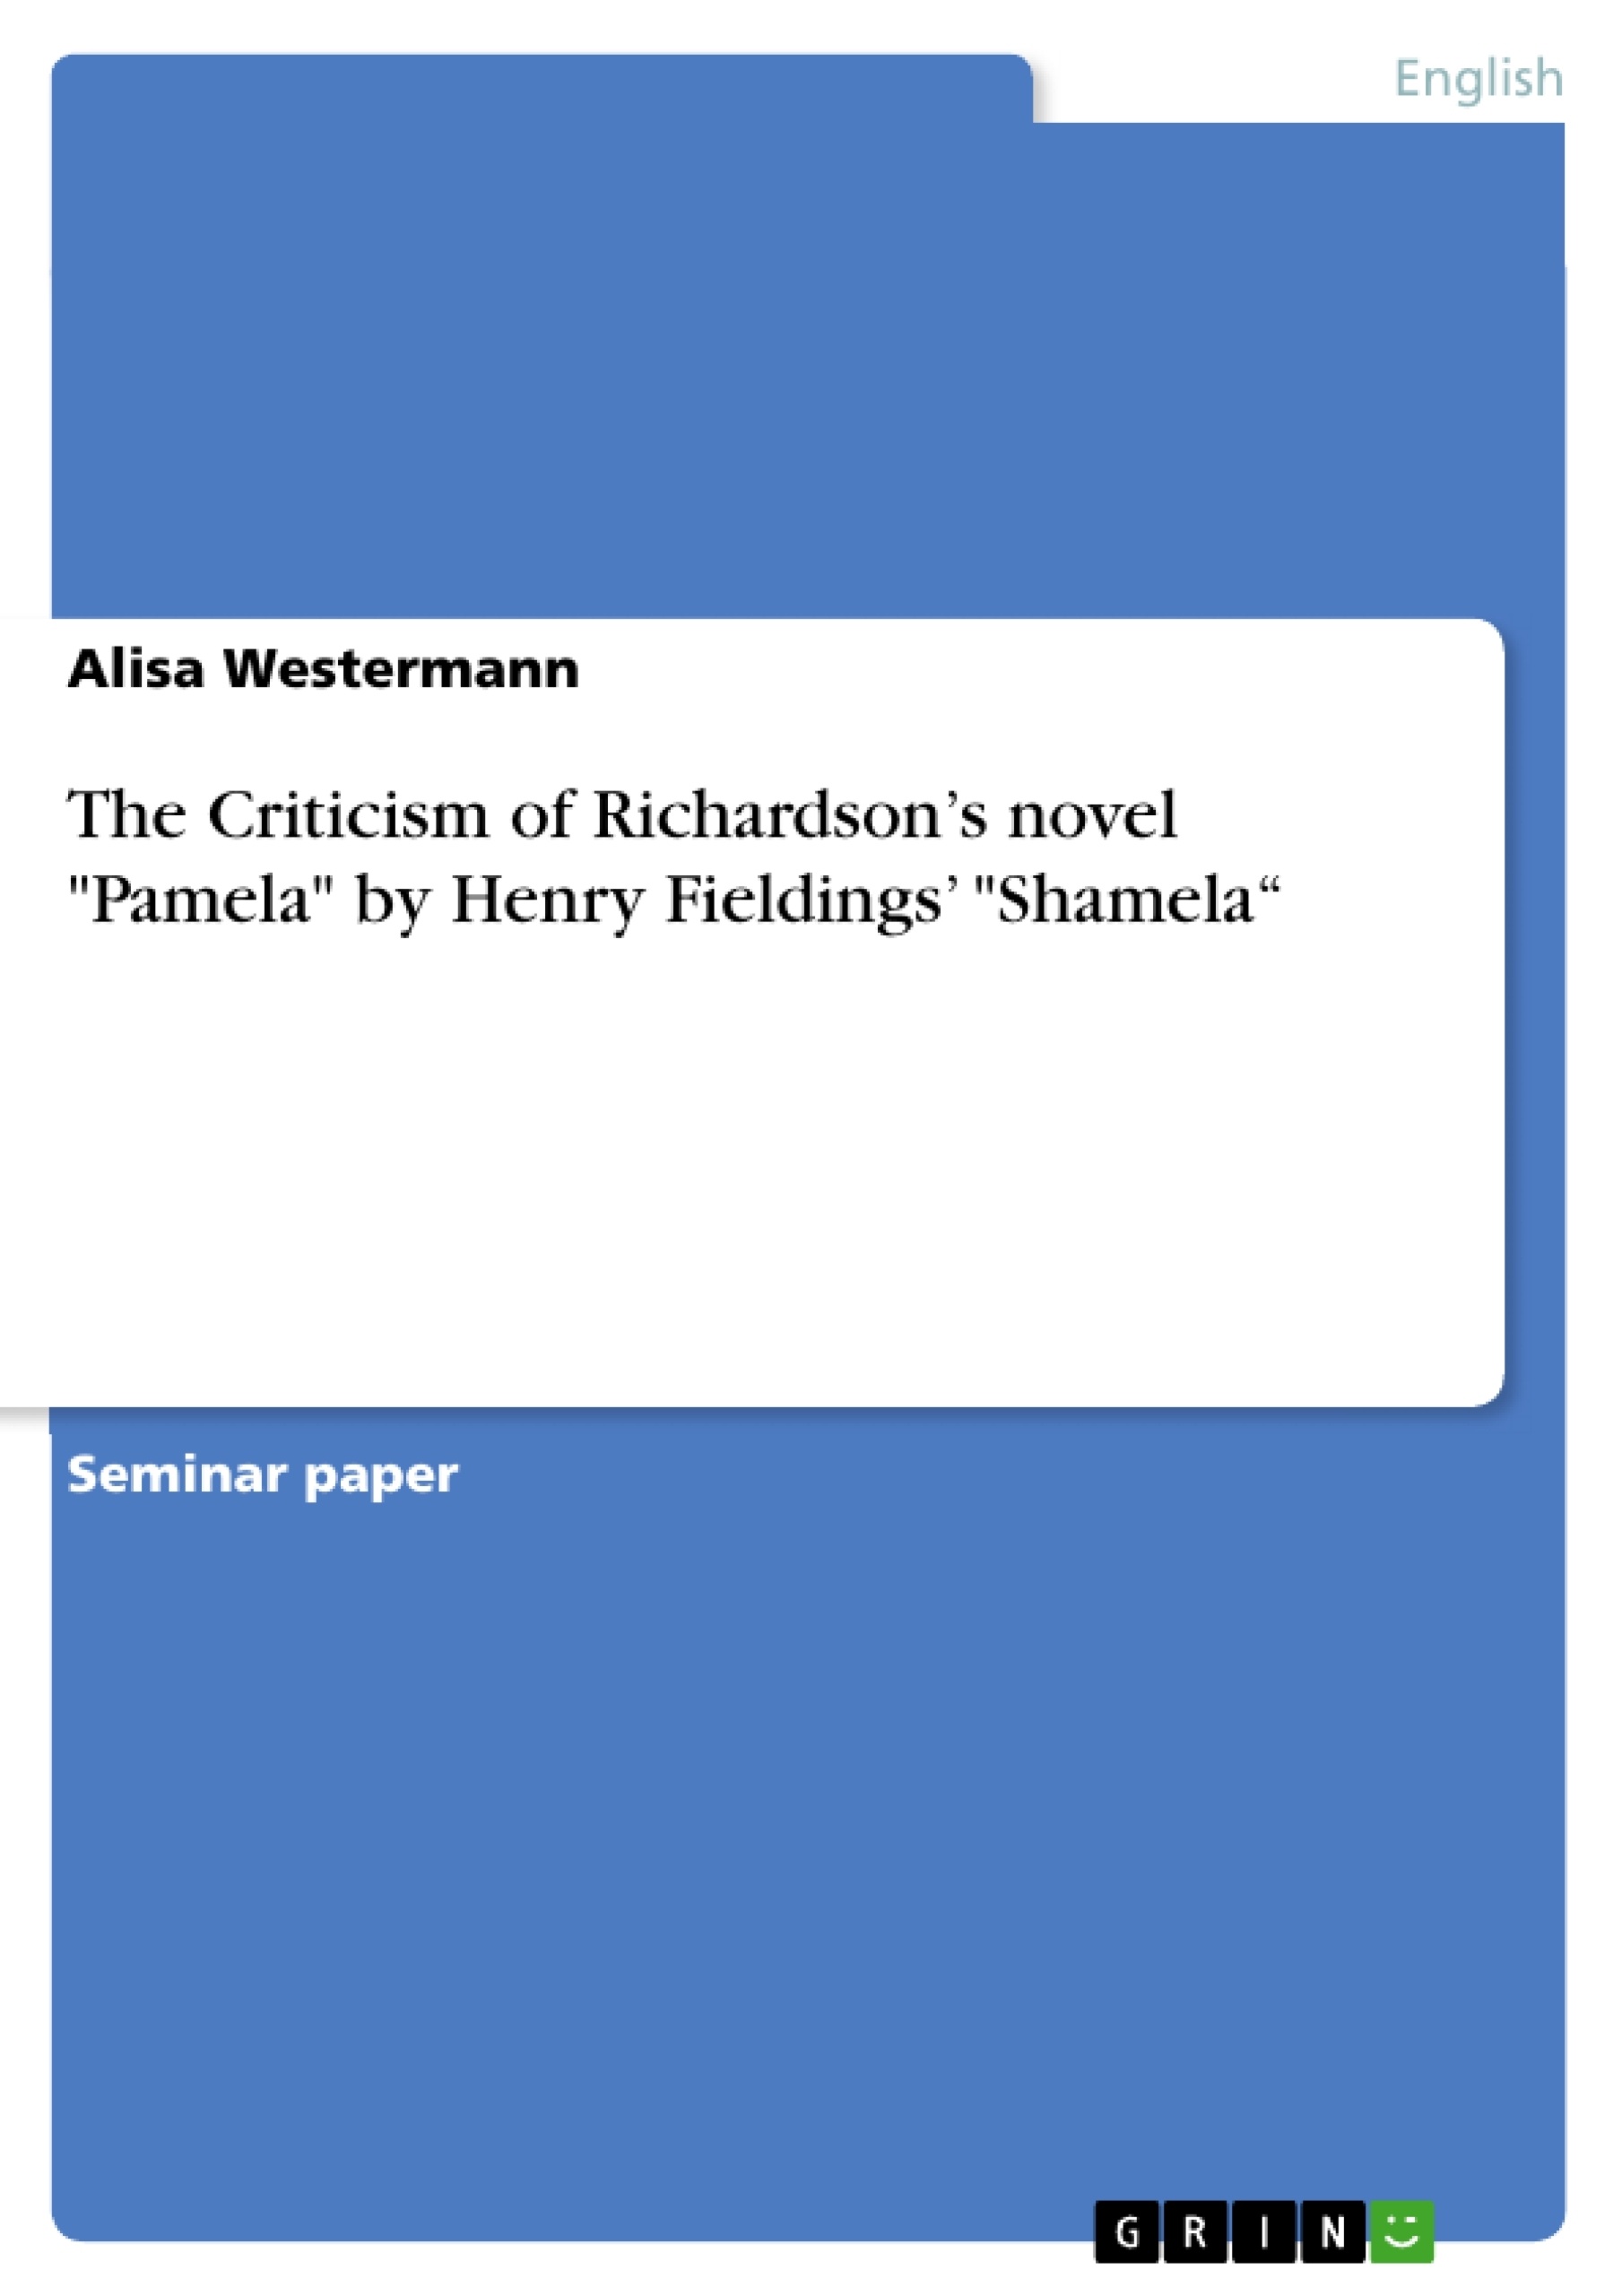 Titre: The Criticism of Richardson’s novel "Pamela" by Henry Fieldings’ "Shamela“